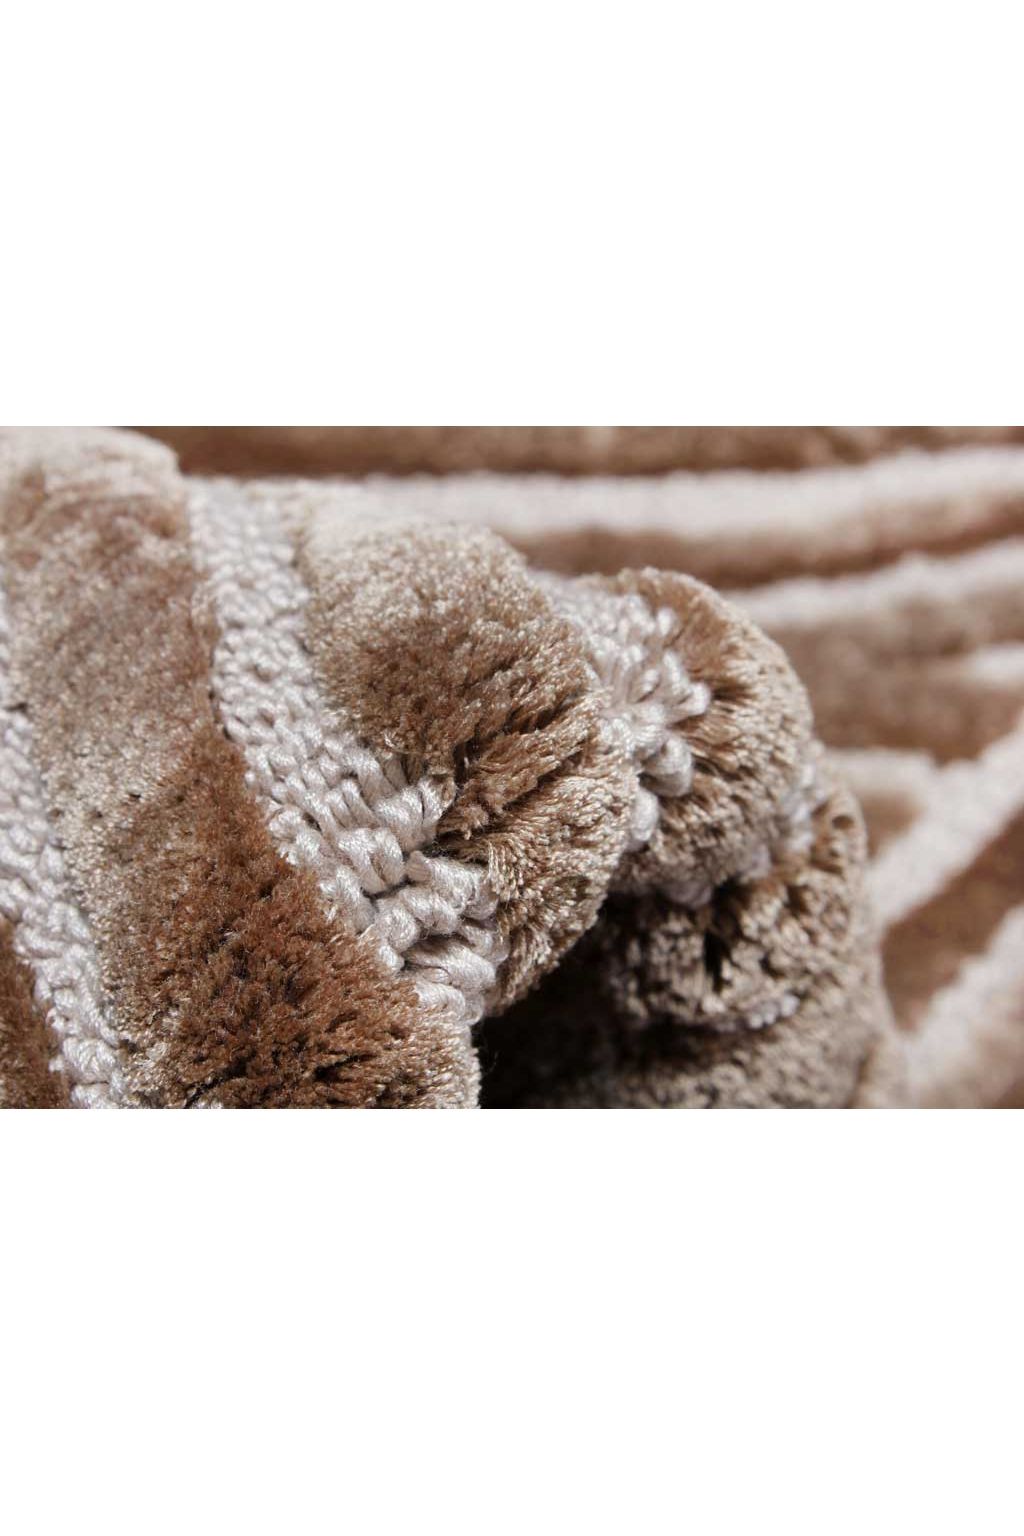 #Turkish_Carpets_Rugs# #Modern_Carpets# #Abrash_Carpets#Trace 004-A